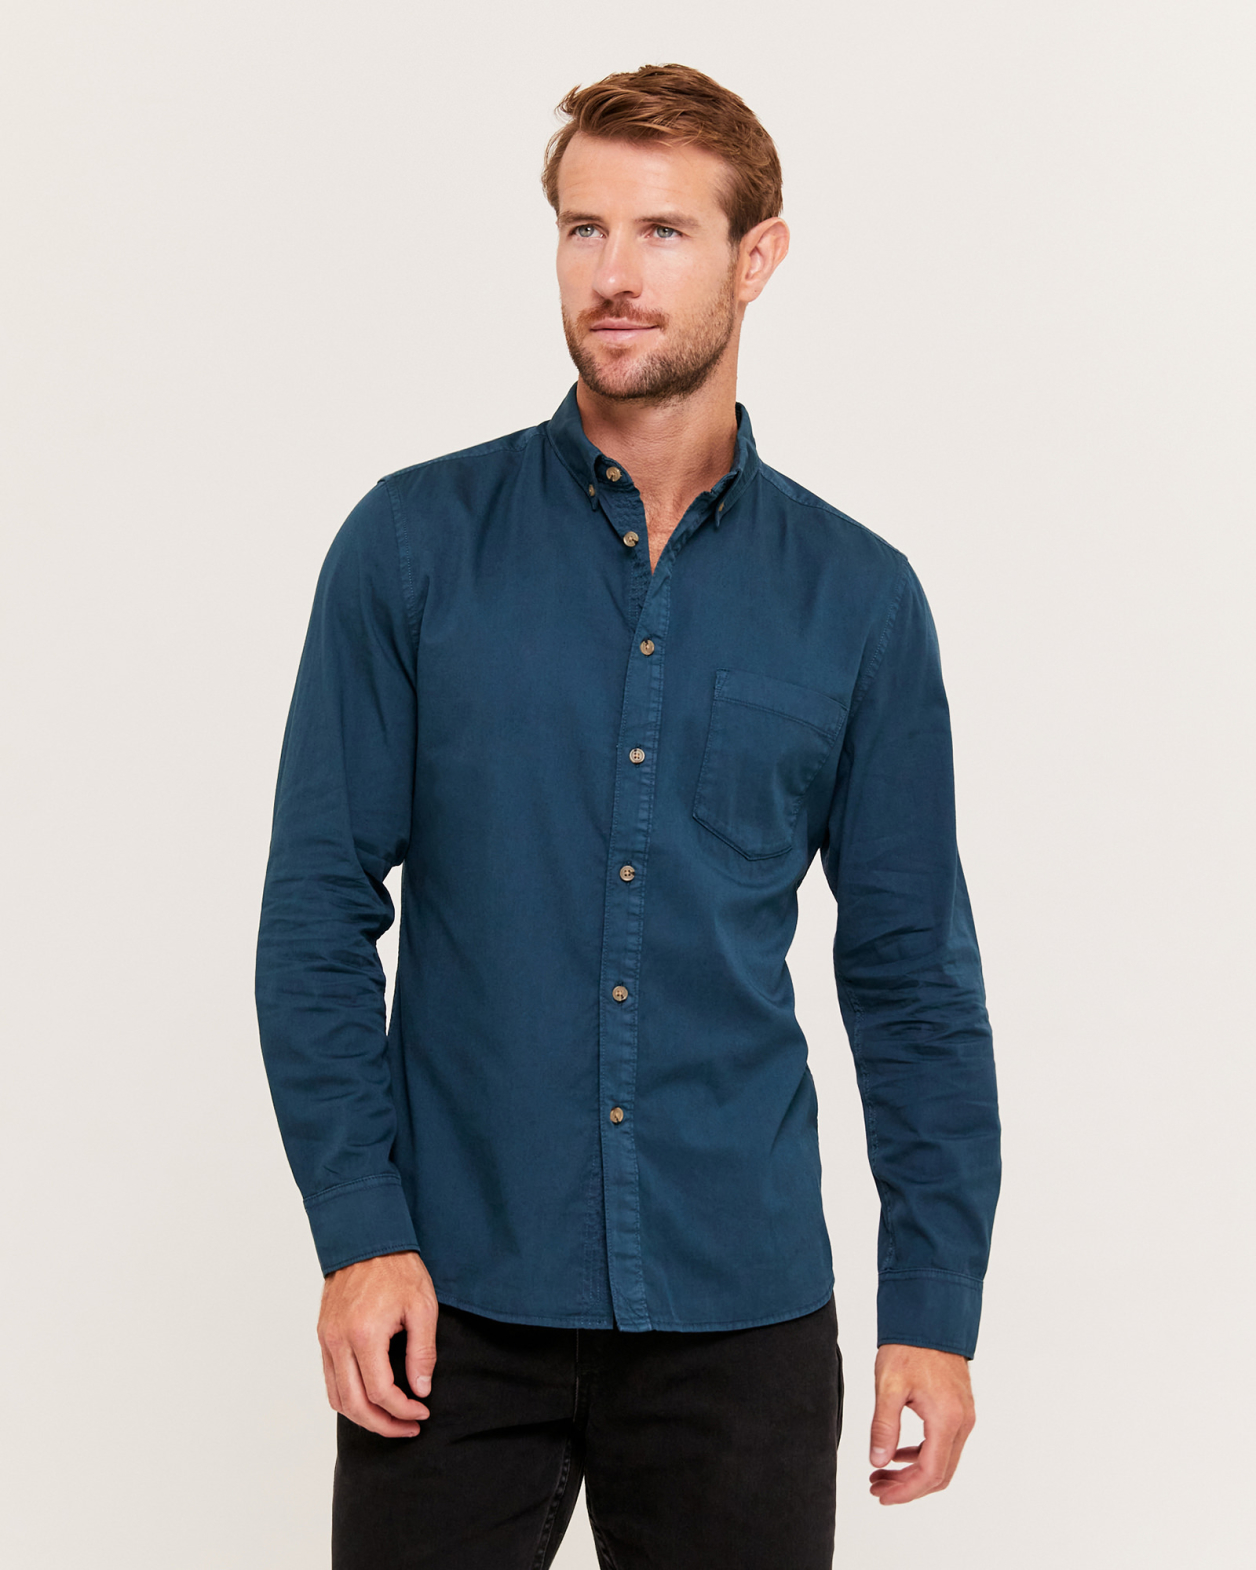 Freeman Garment Dye Shirt in KINGFISHER